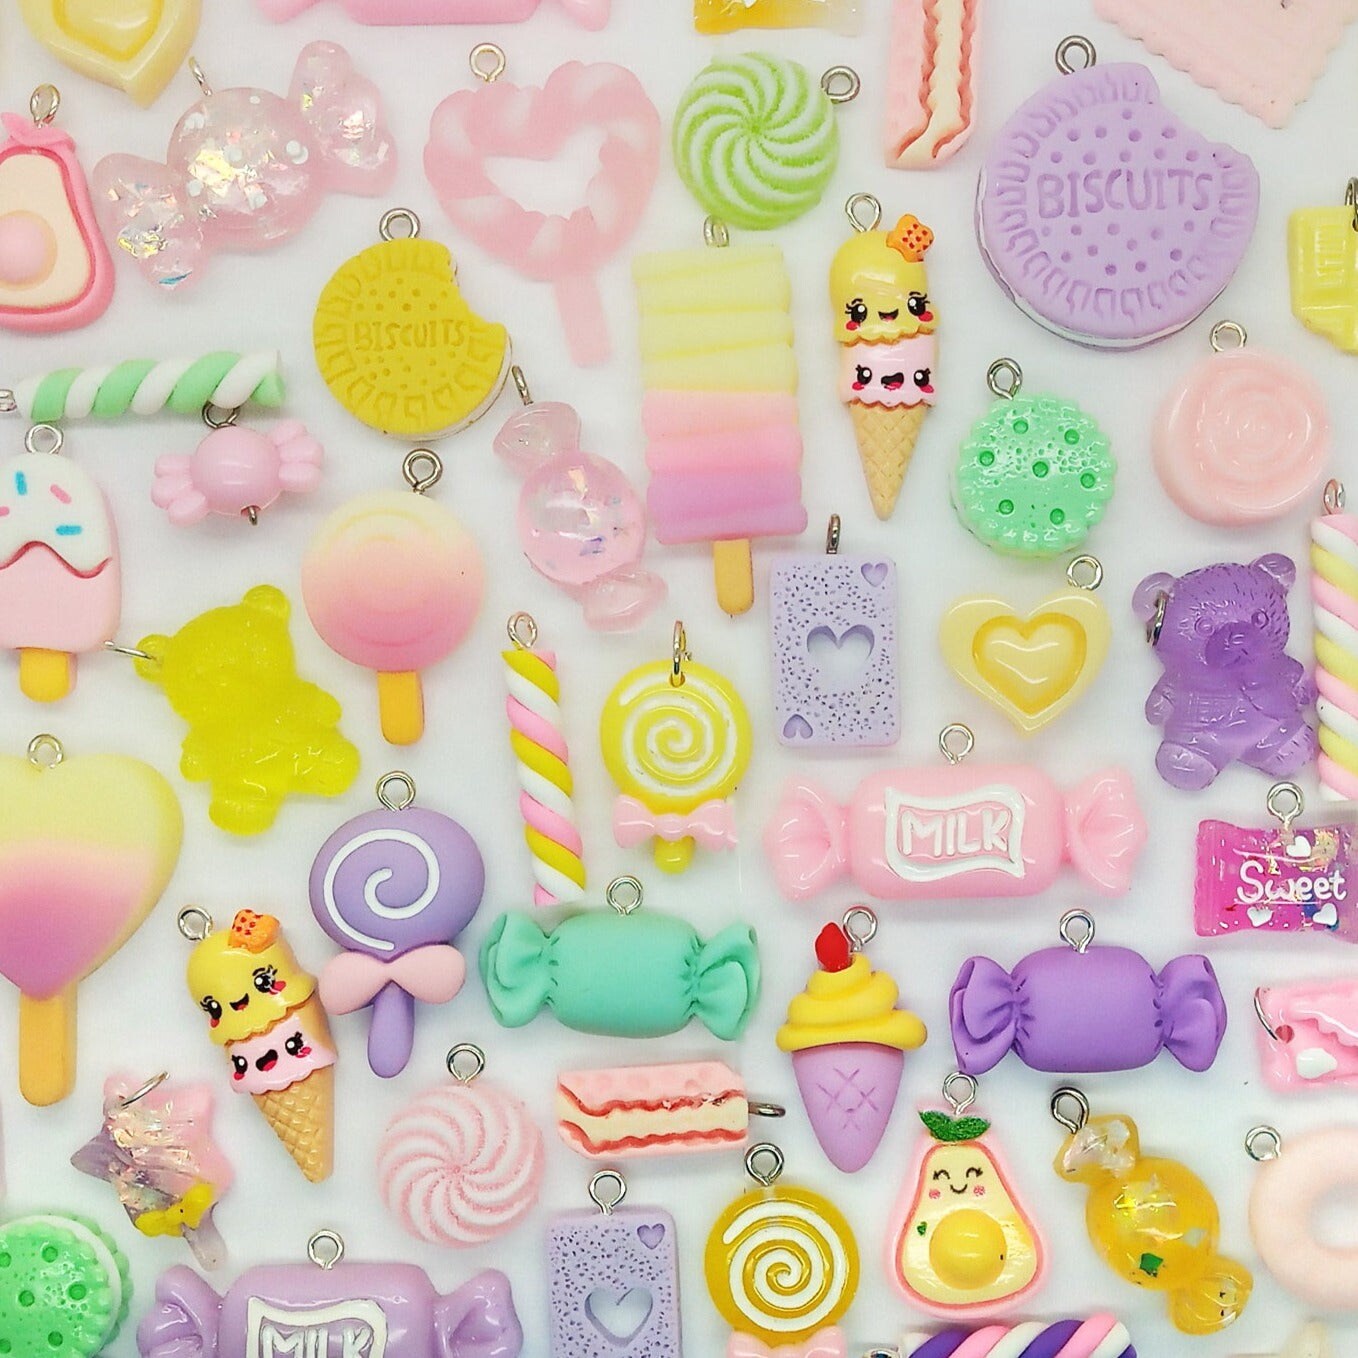 Pastel Food Charm Assortment, 20 pc Kawaii Candy and Sweet Pendants, Adorabilities